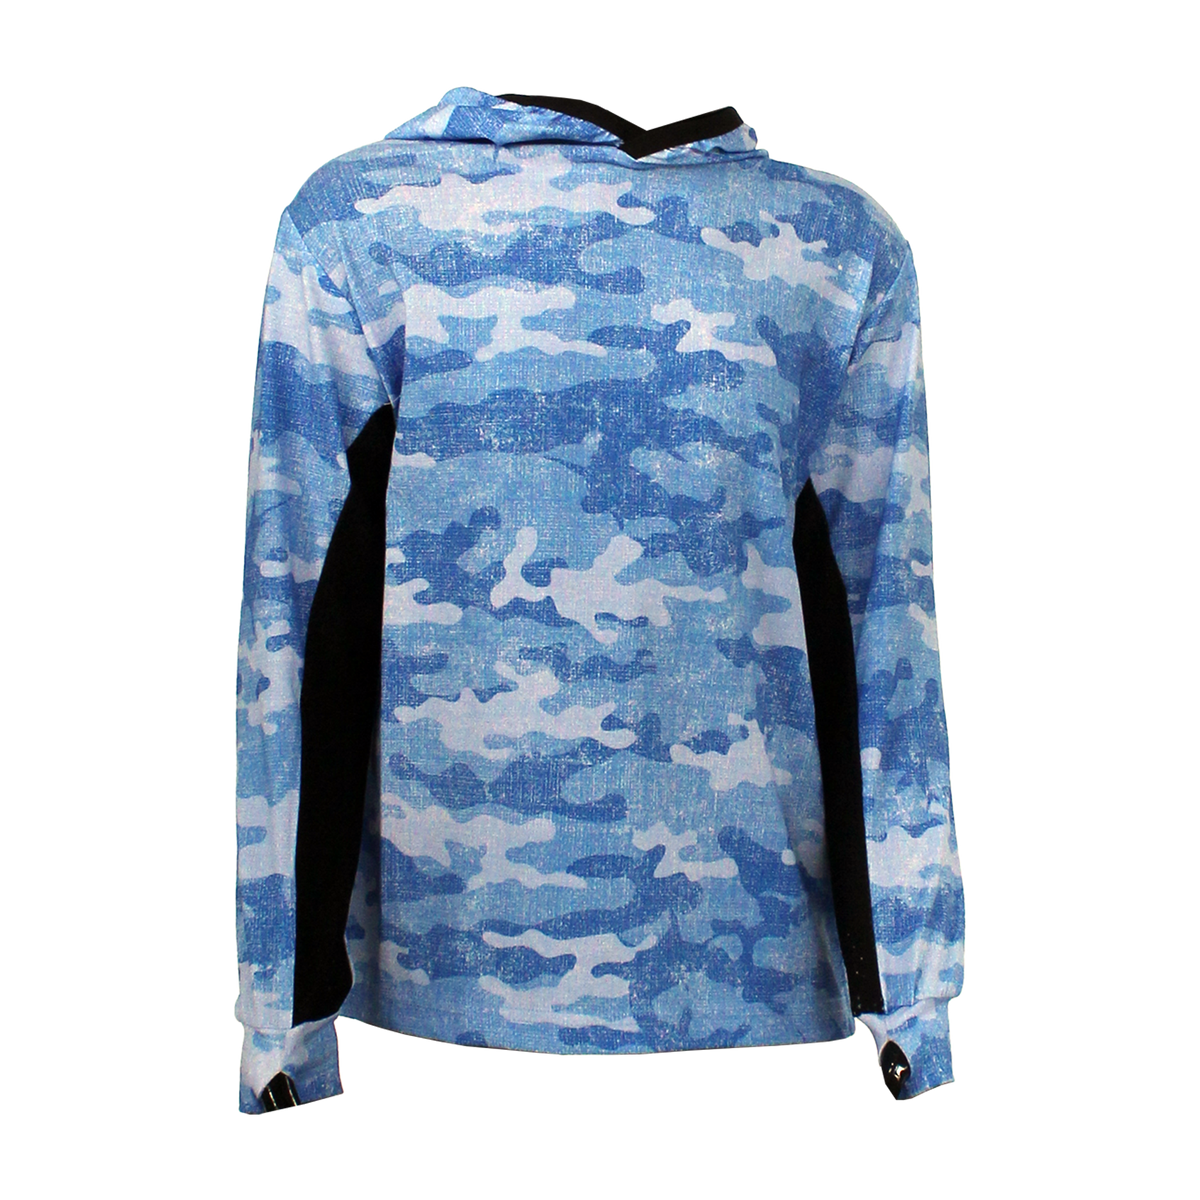 Atlan Junior Hooded Long Sleeve Fisherman Sailor Camo Patterned Blue UV Protected Shirt